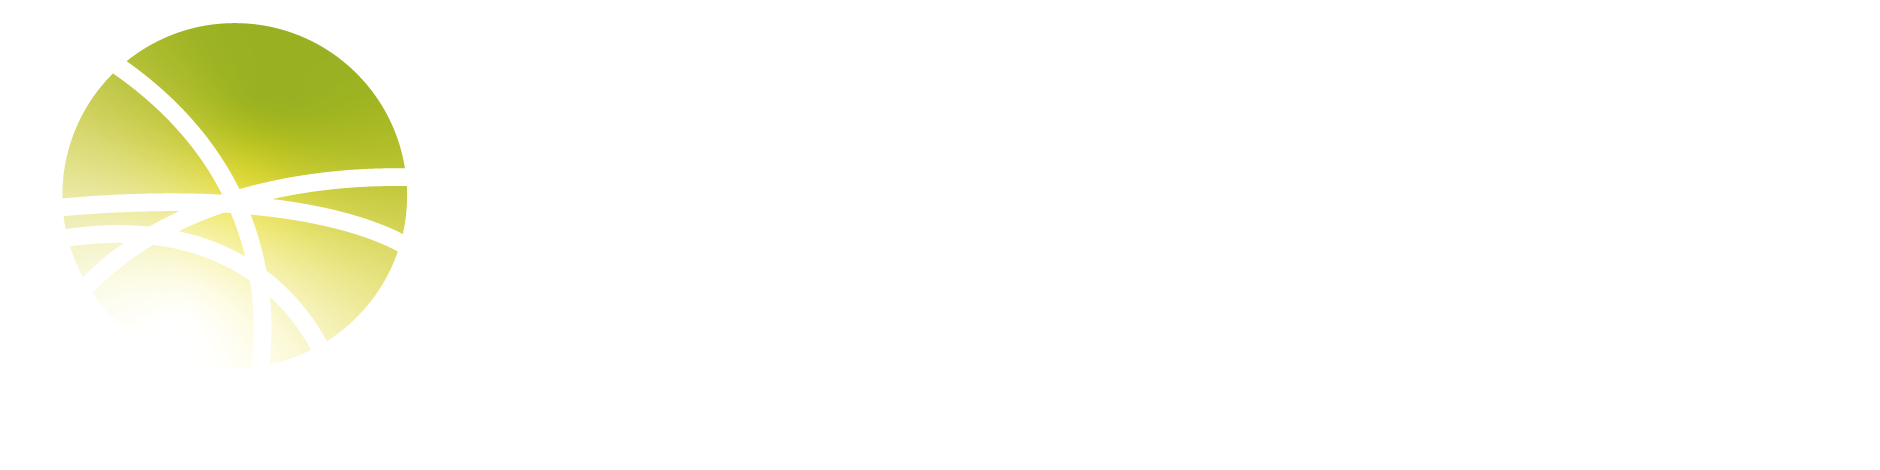 systemhaus krabbe: Logo